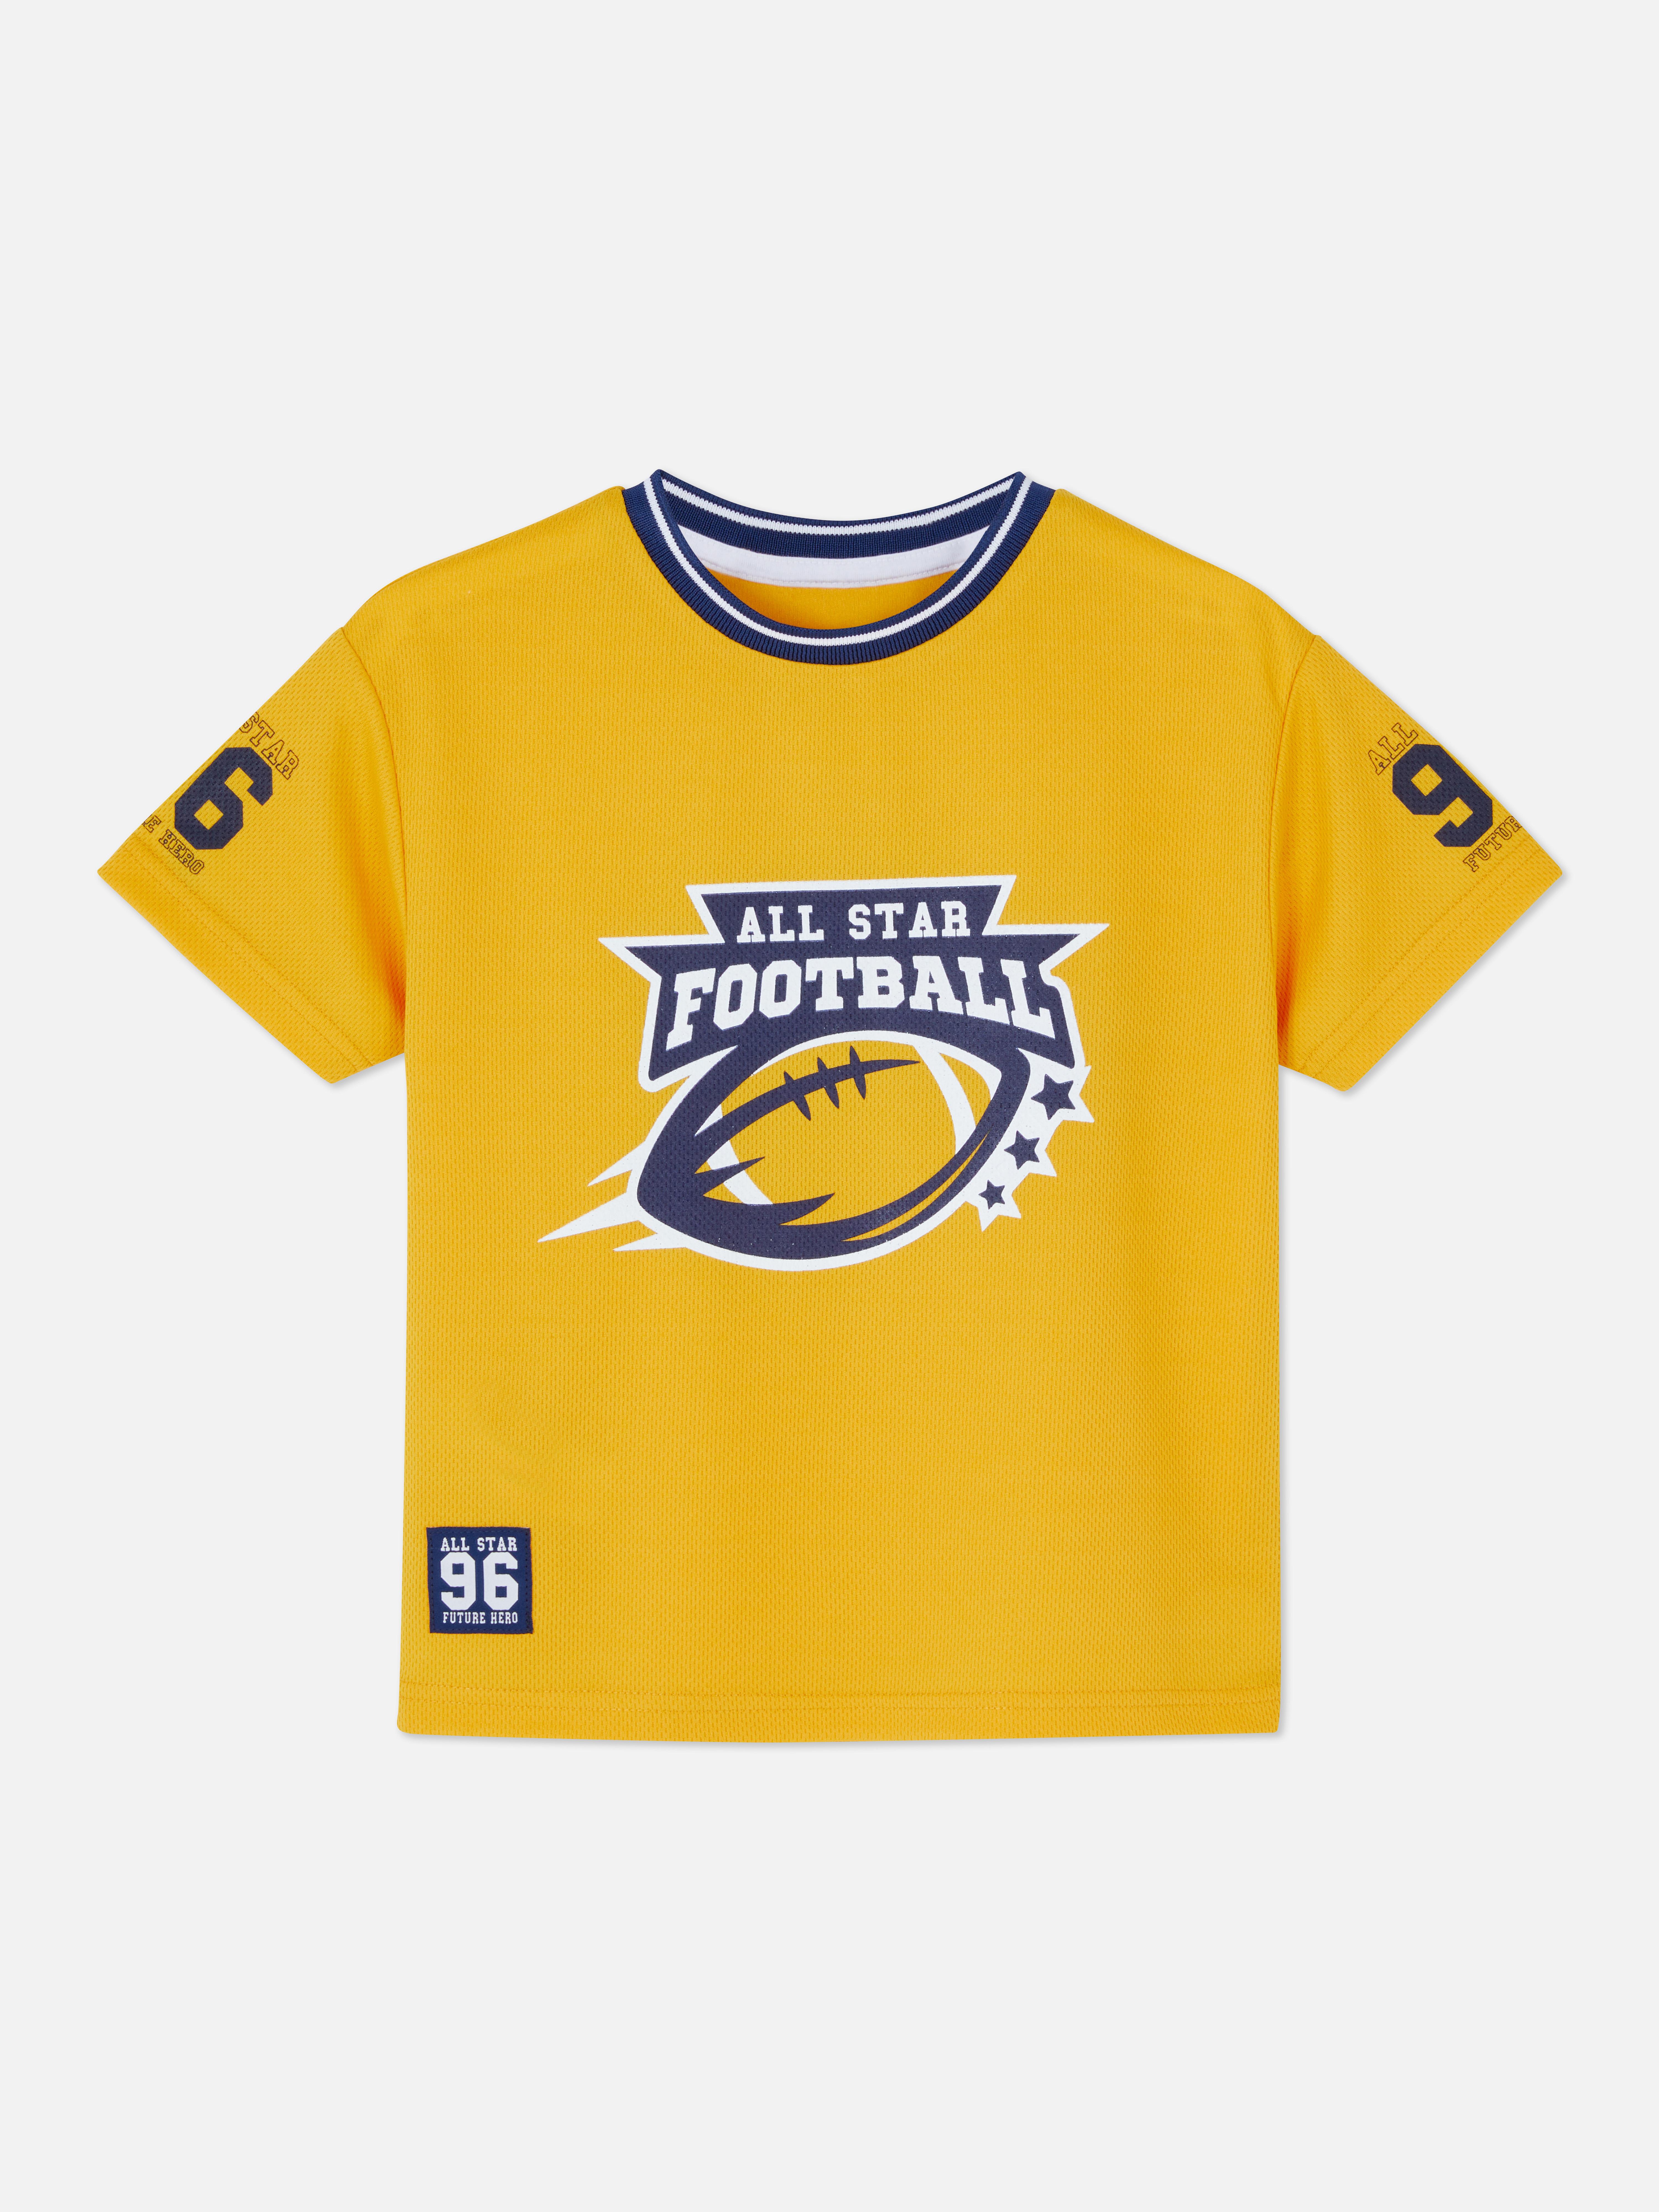 All Star Football T-Shirt | Boys' Clothes Ages 2-7 | Boys Clothes ...